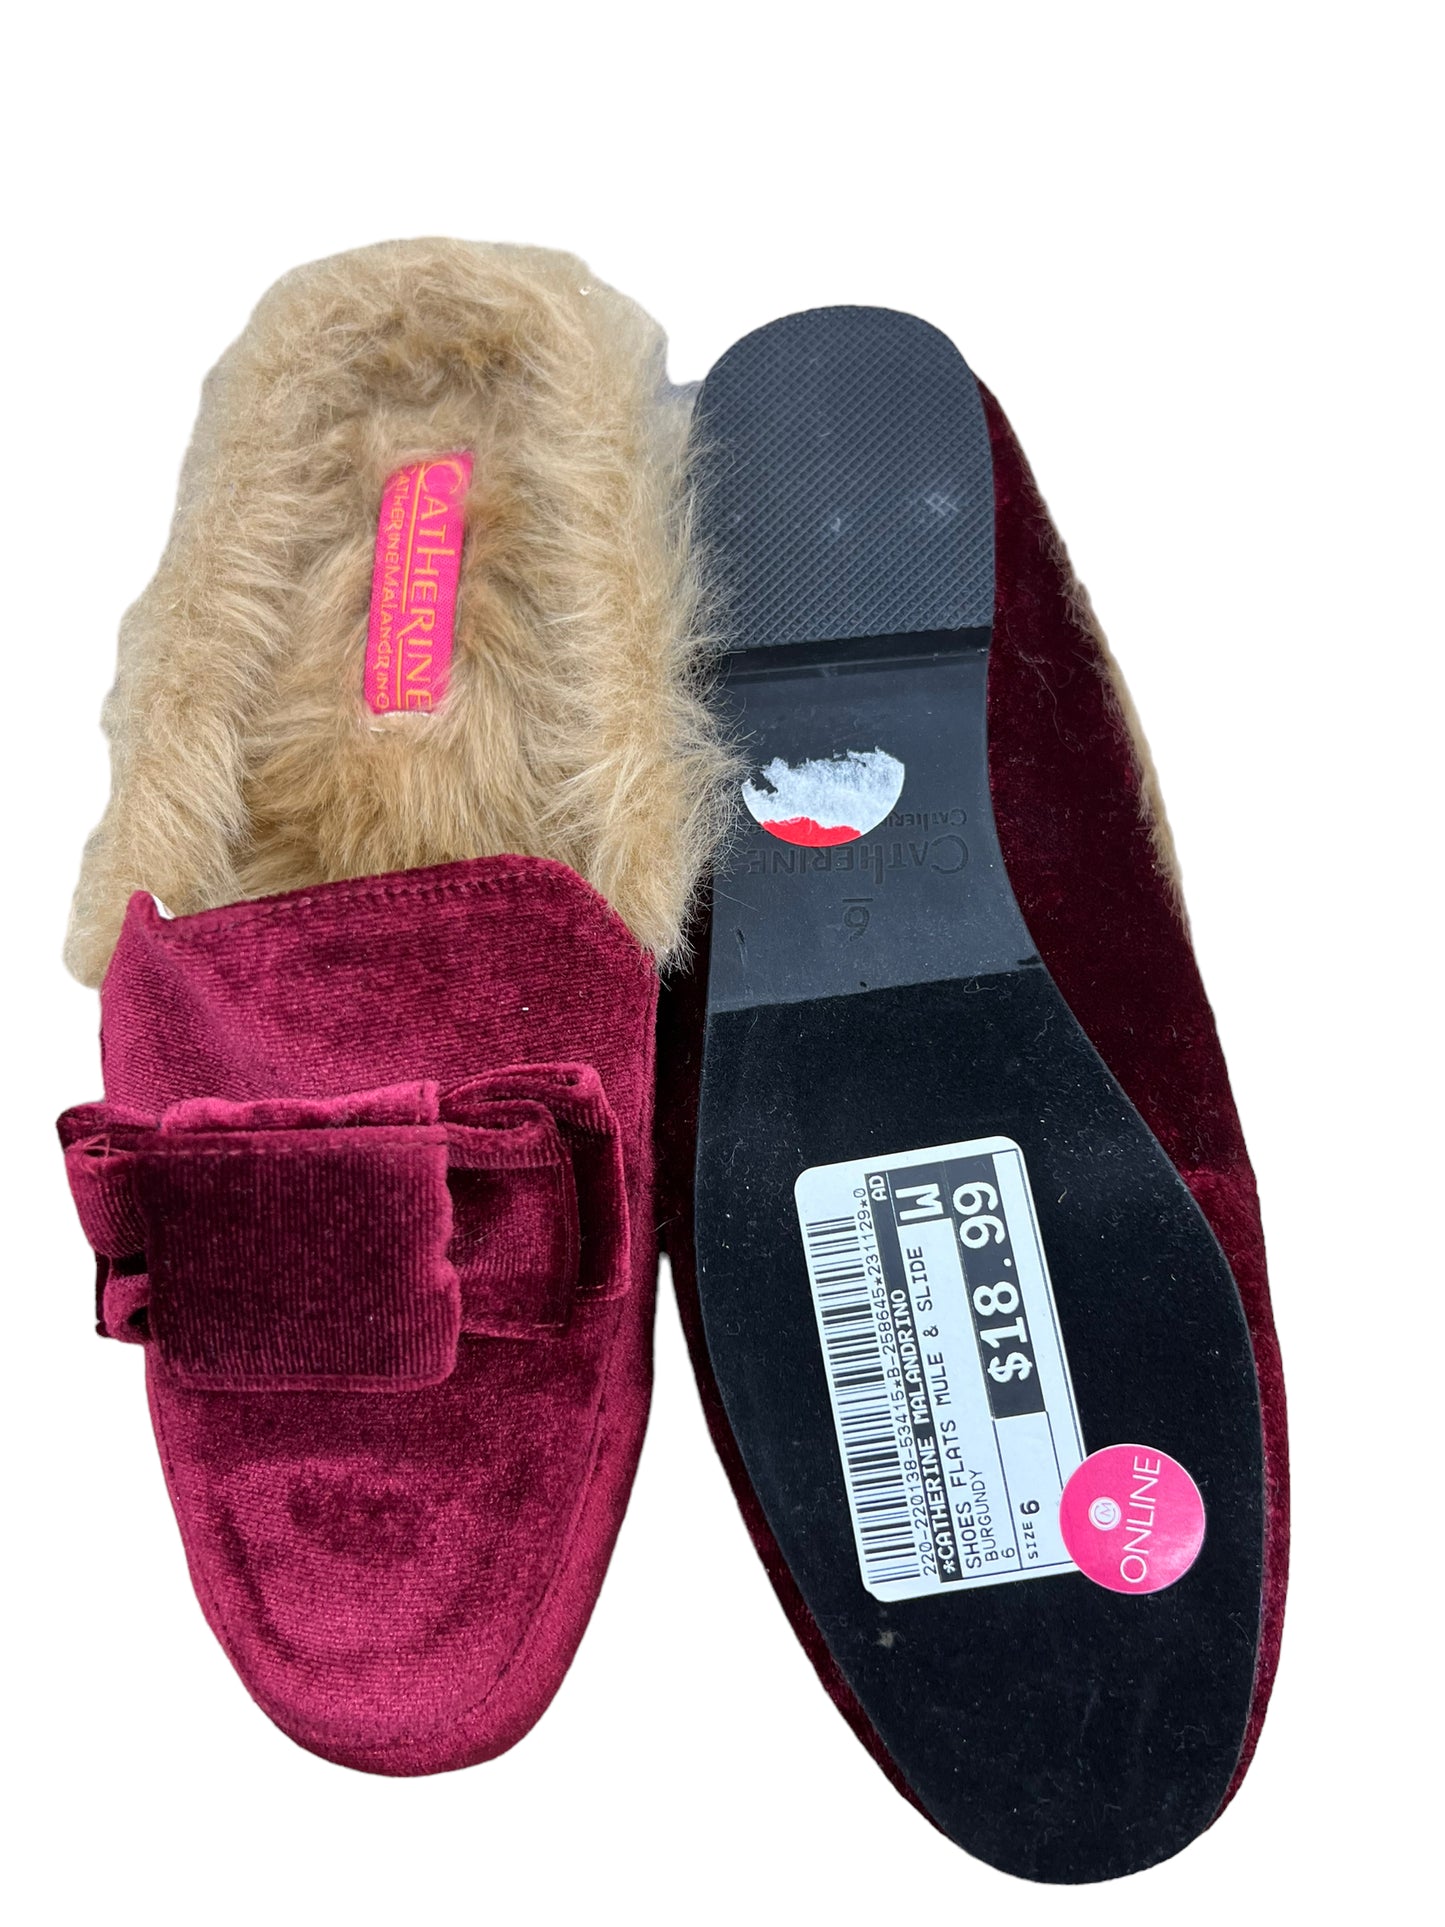 Shoes Flats Mule & Slide By Catherine Malandrino  Size: 6